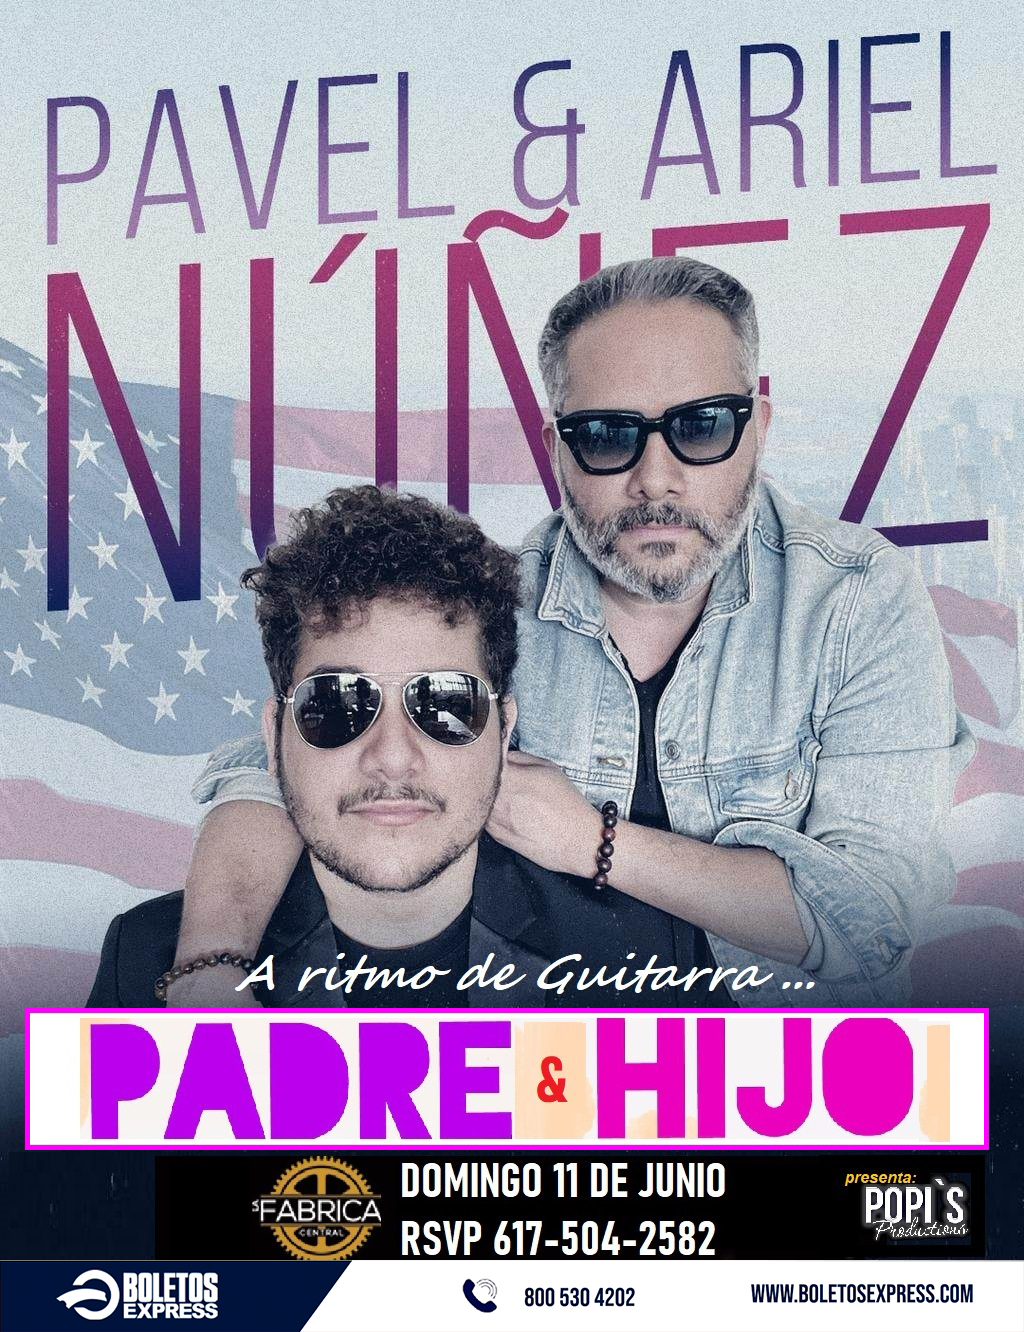 PAVEL & ARIEL Núñez